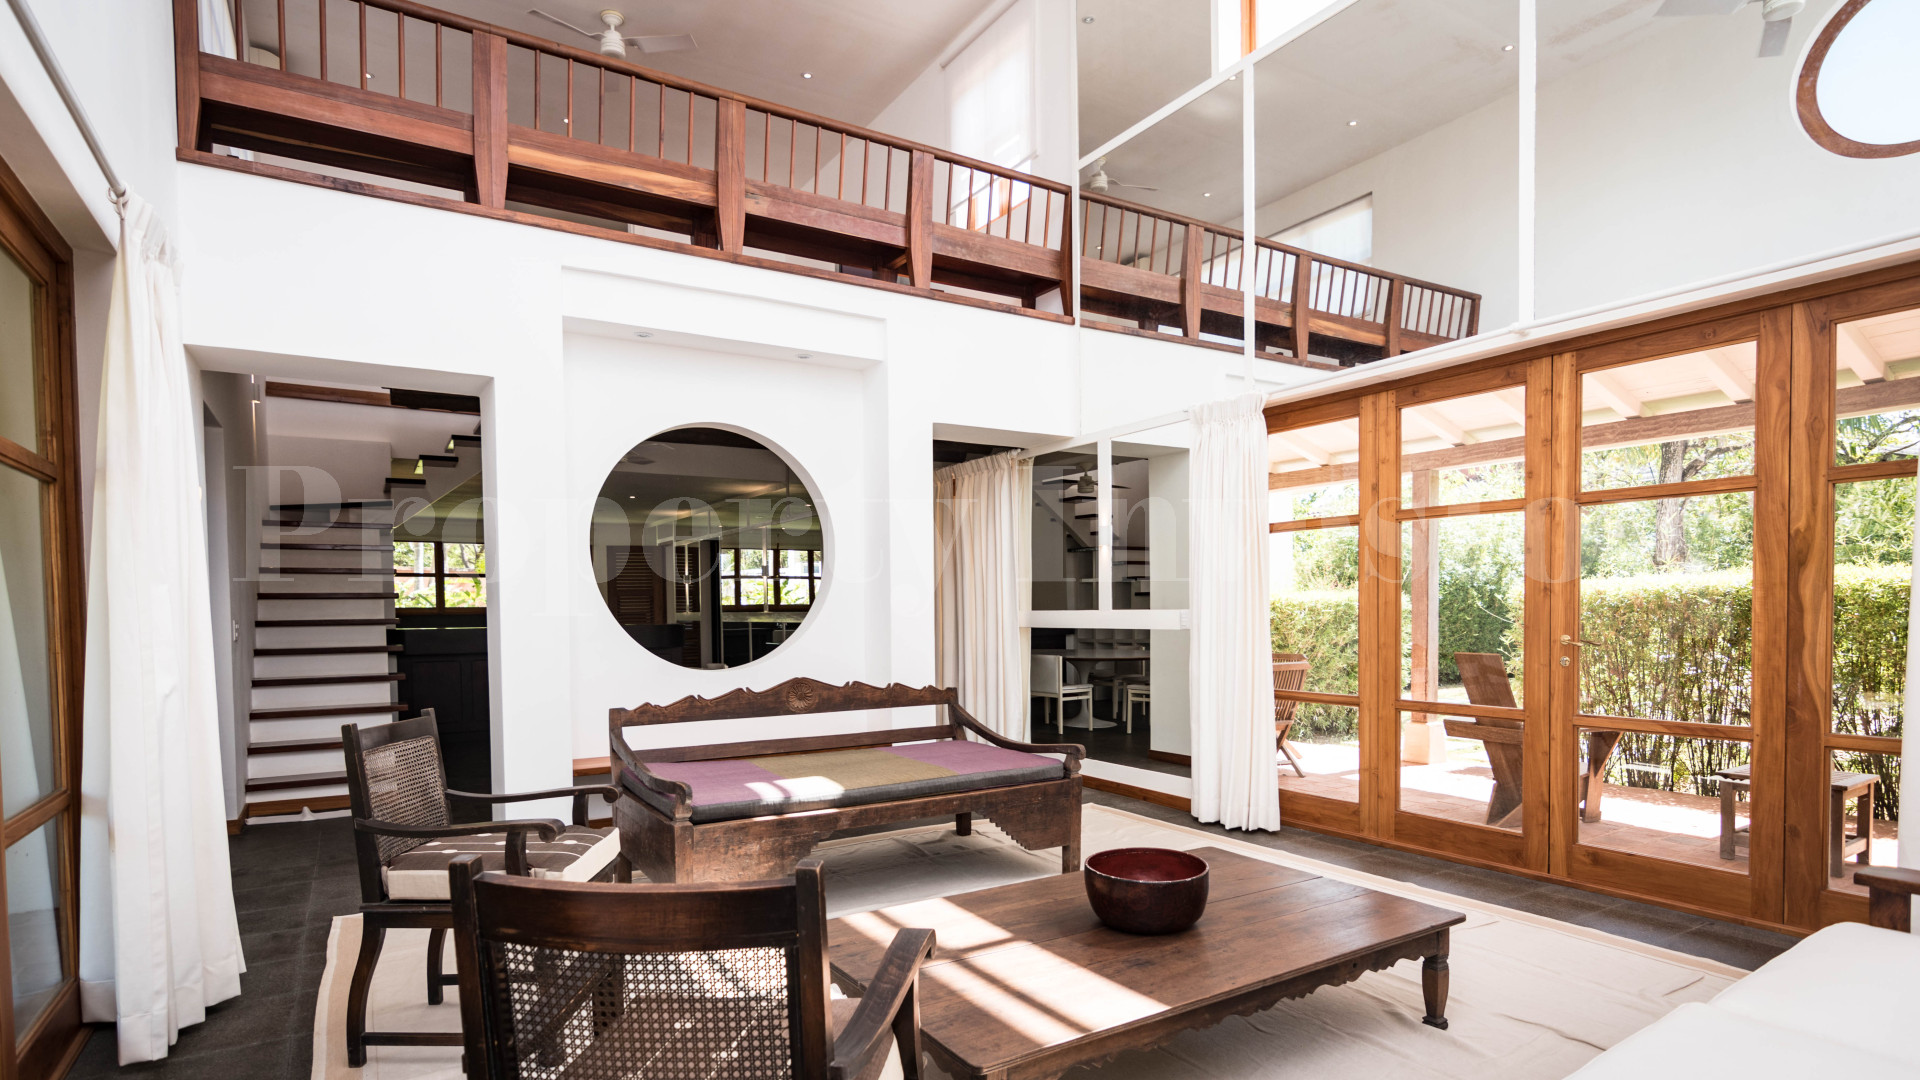 Elegant 5 Bedroom Luxury Tropical Estate for Sale in Pedasi, Panama